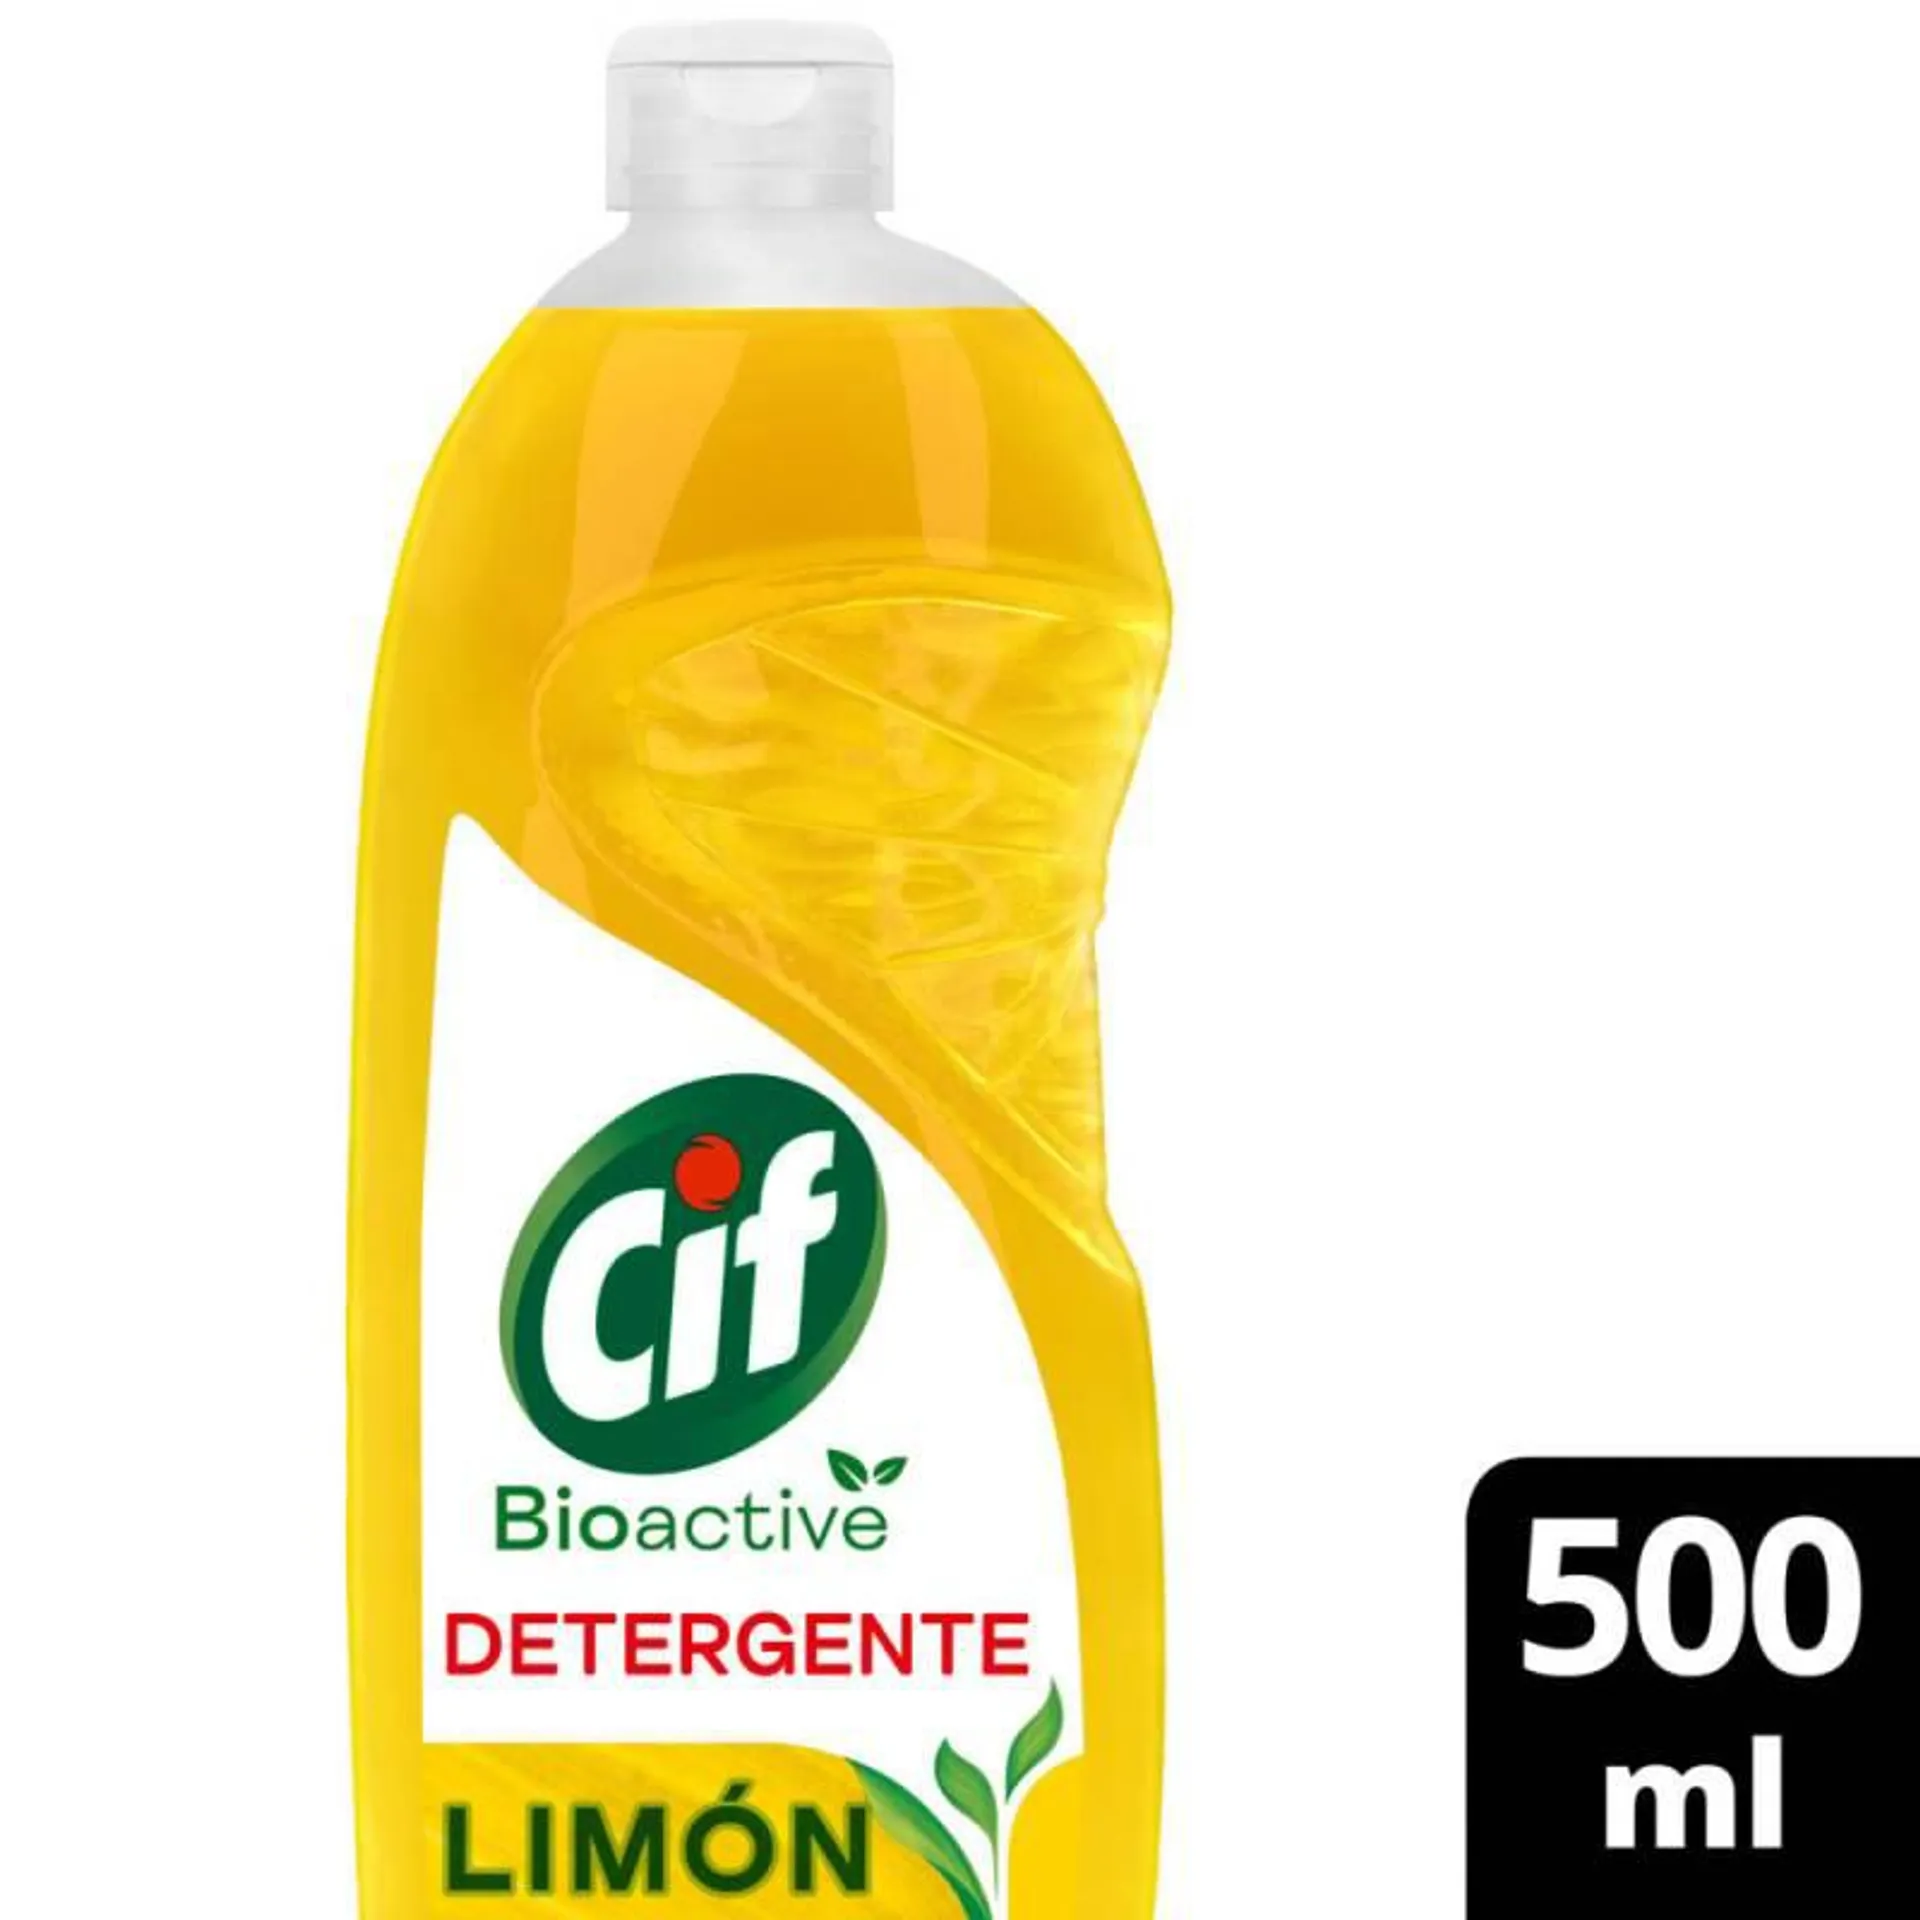 Detergente Liquido Bioactive Limon Cif x 500 cc.